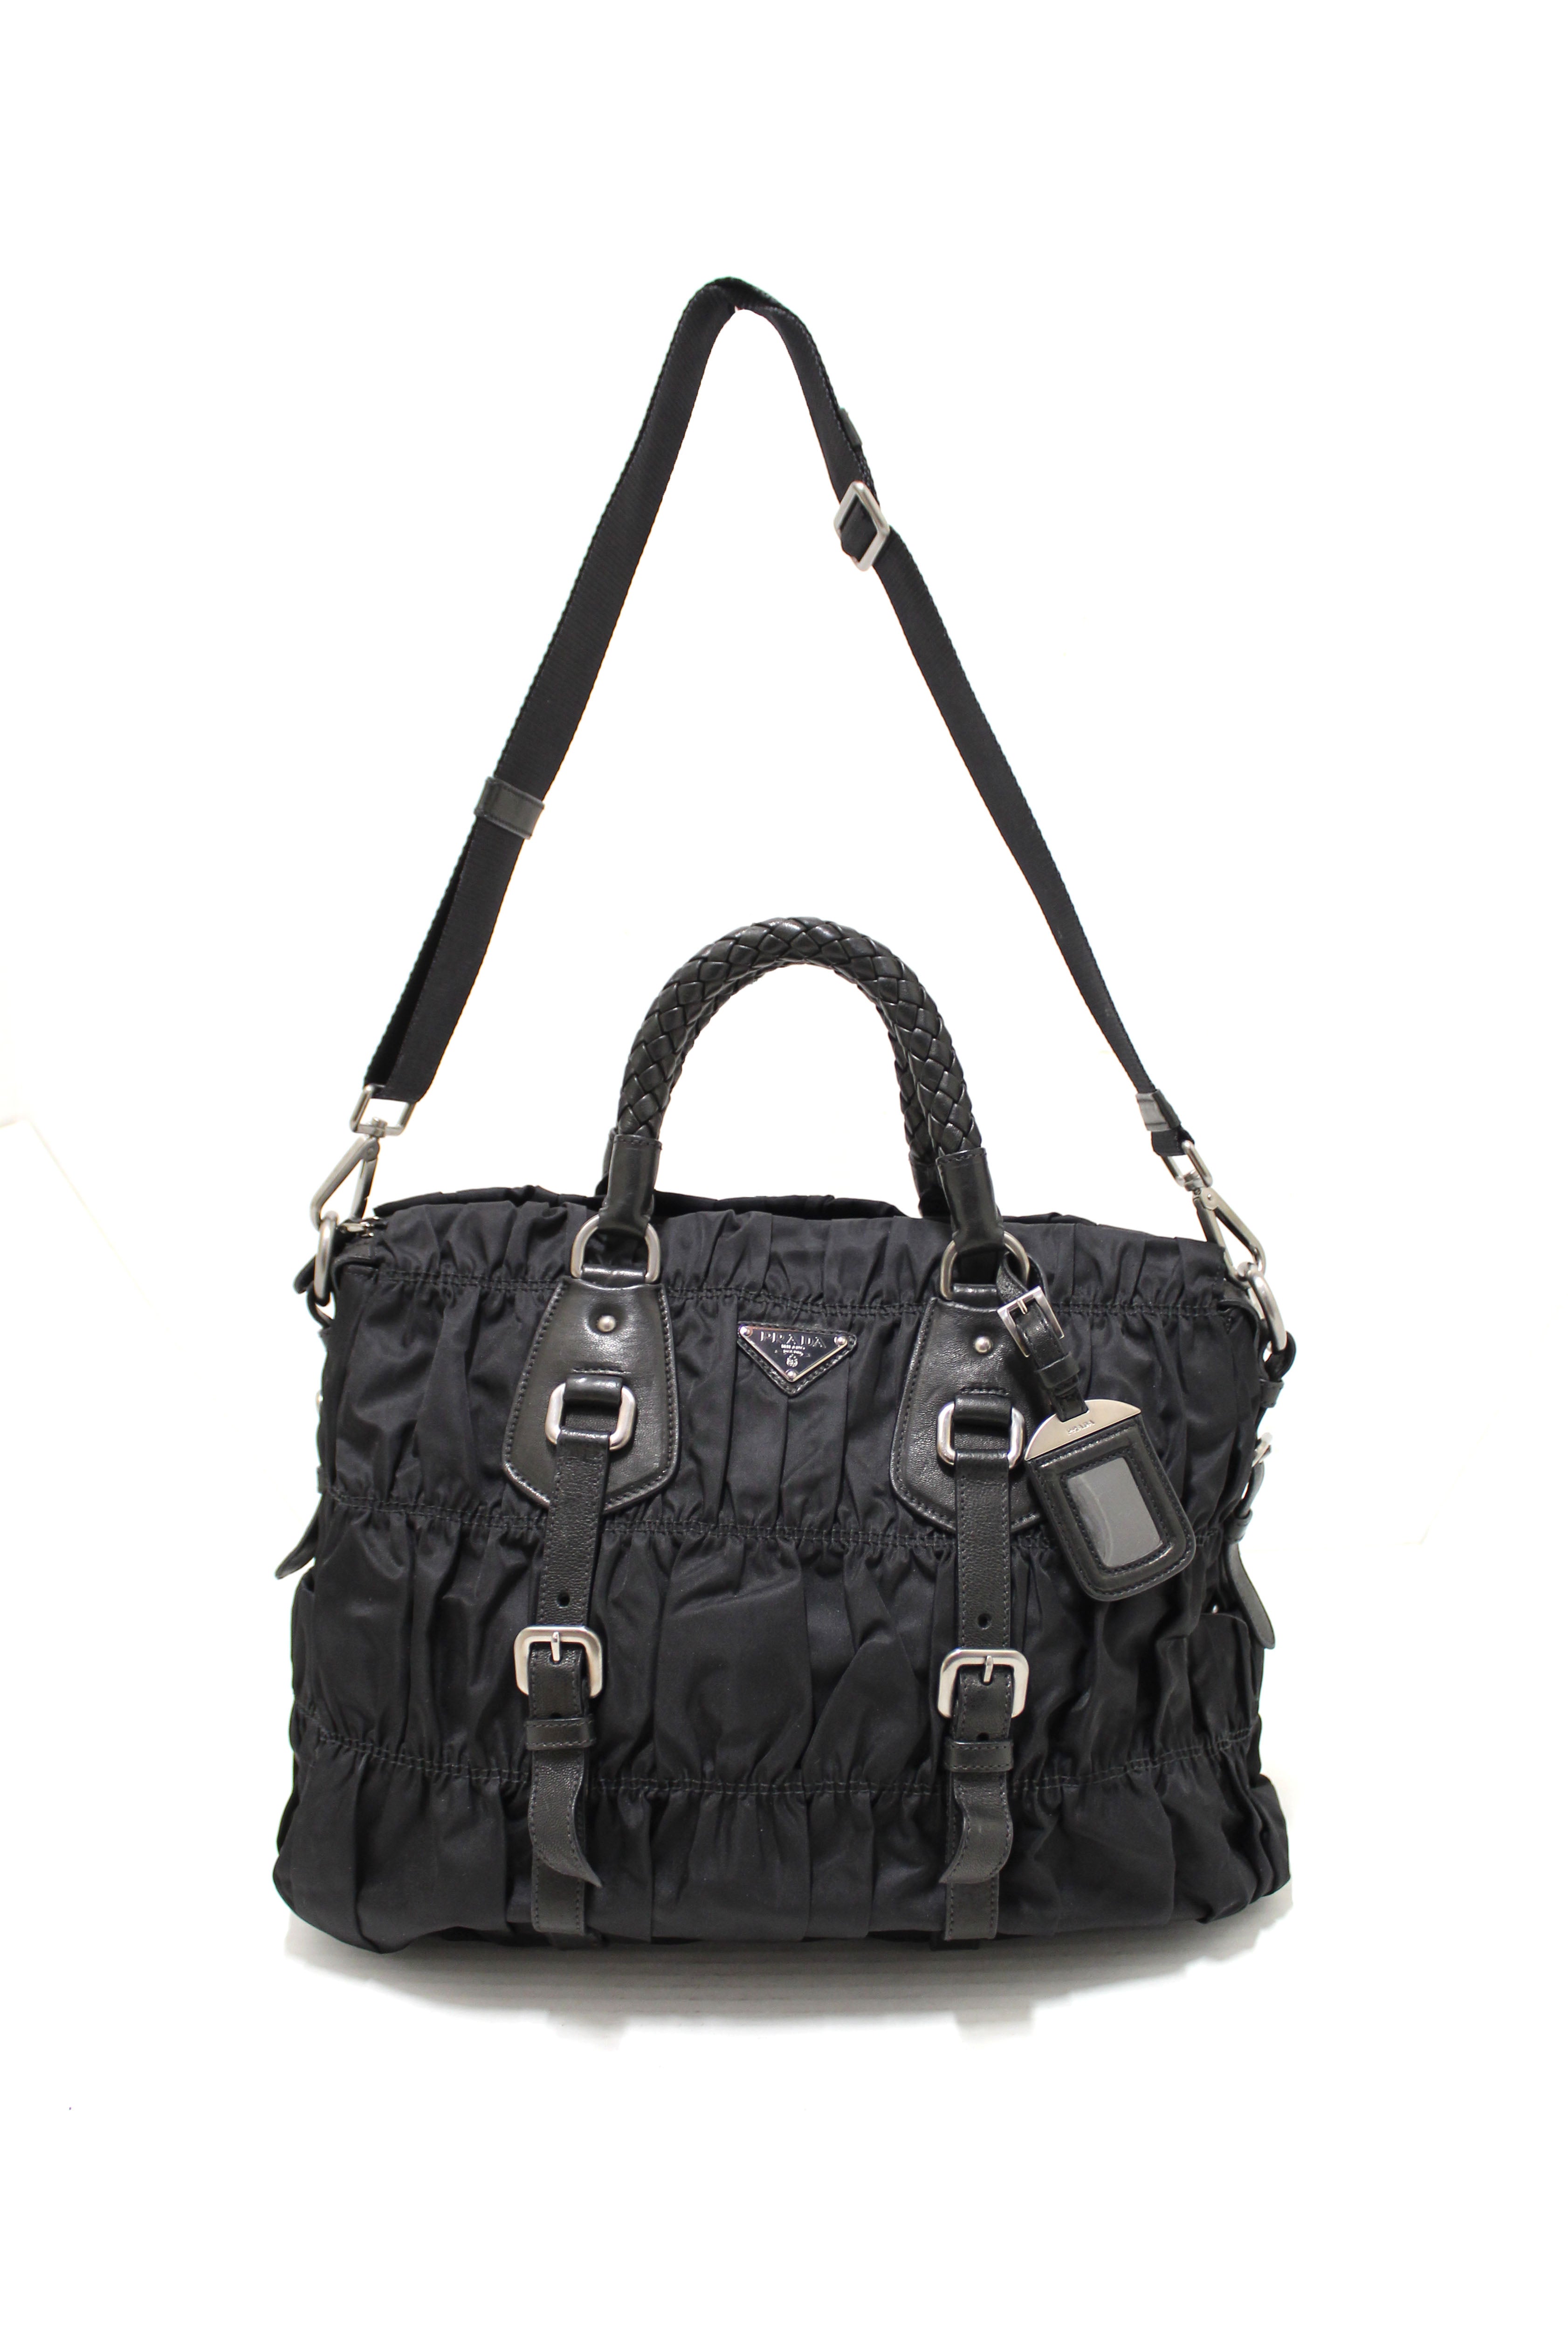 Authentic Prada Black Nylon Gaufre Shoulder Tote Bag – Paris